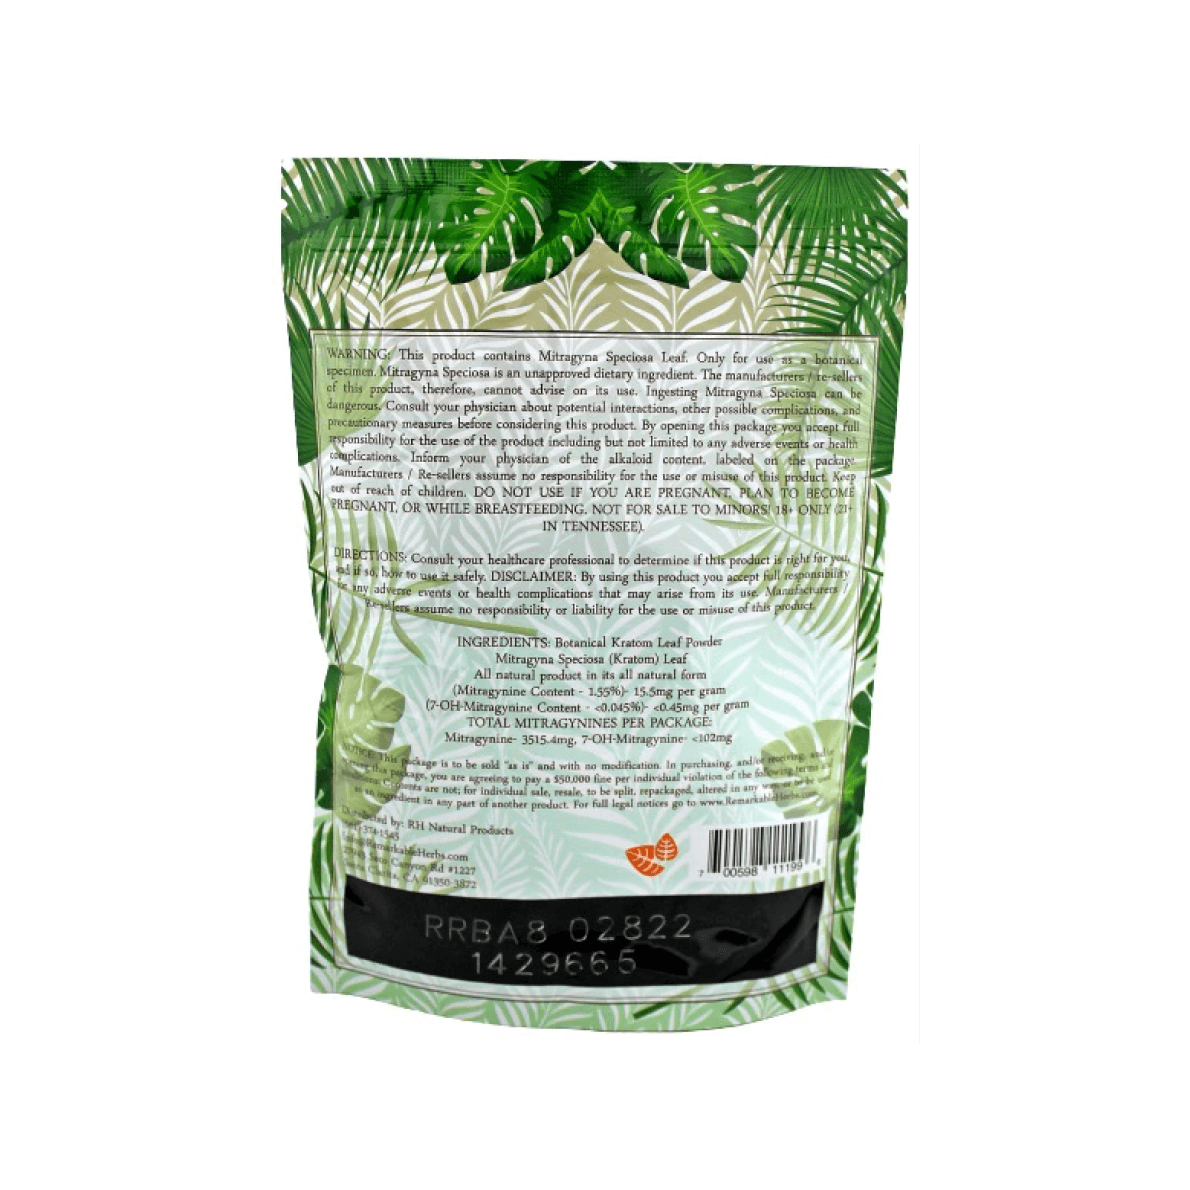 Malaysian Kratom Remarkable Herbs Green Vein